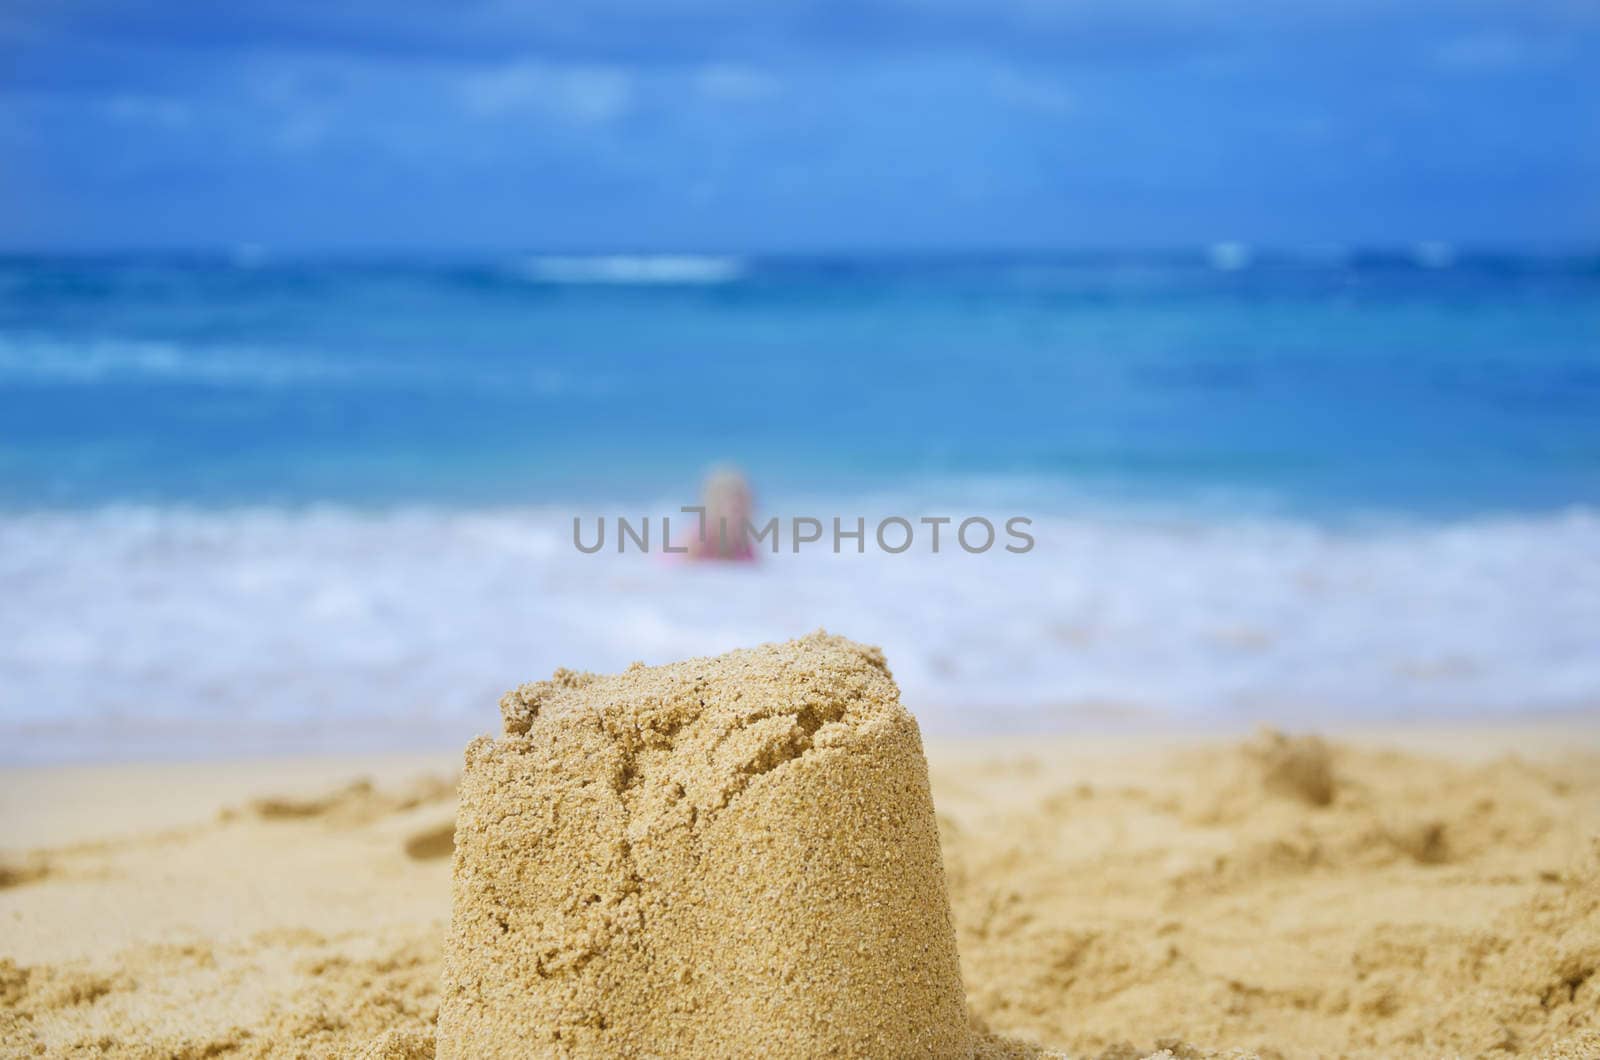 Sculpture on sandy beach by EllenSmile